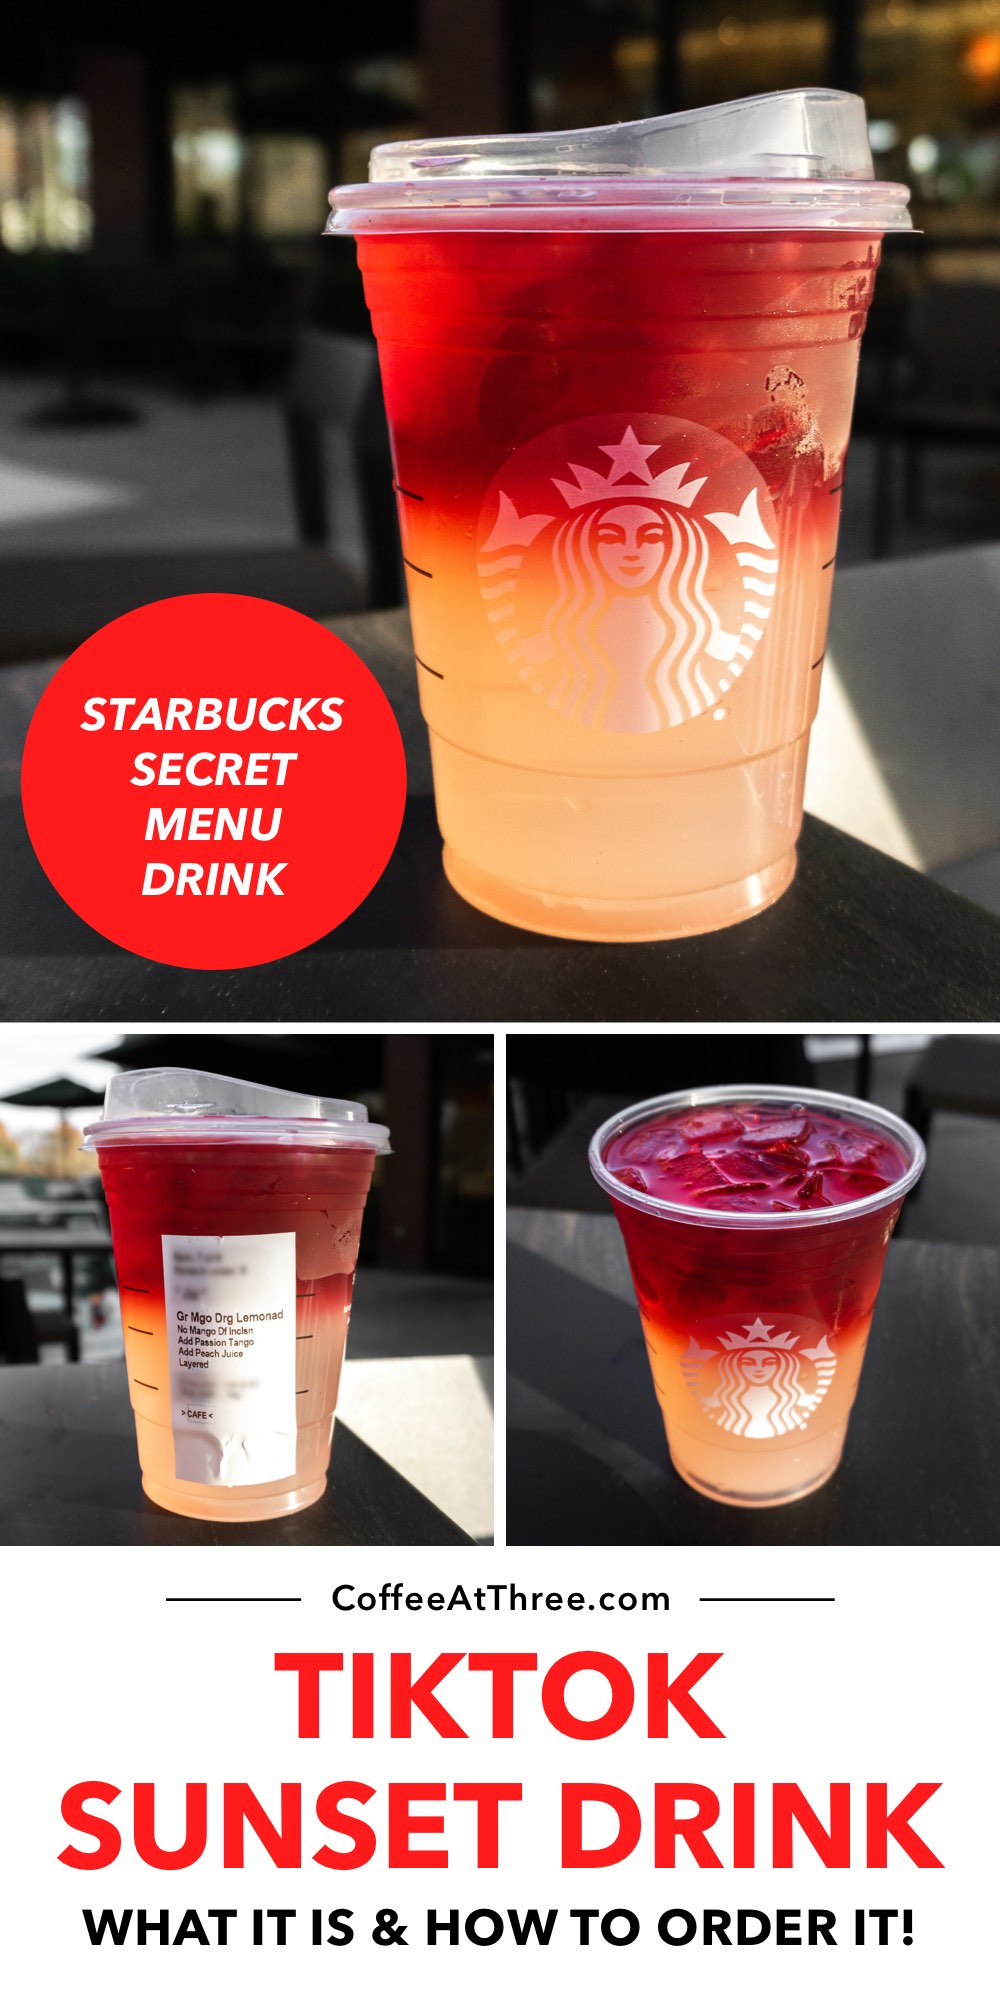 TikTok Sunset Drink (Starbucks Secret Menu)